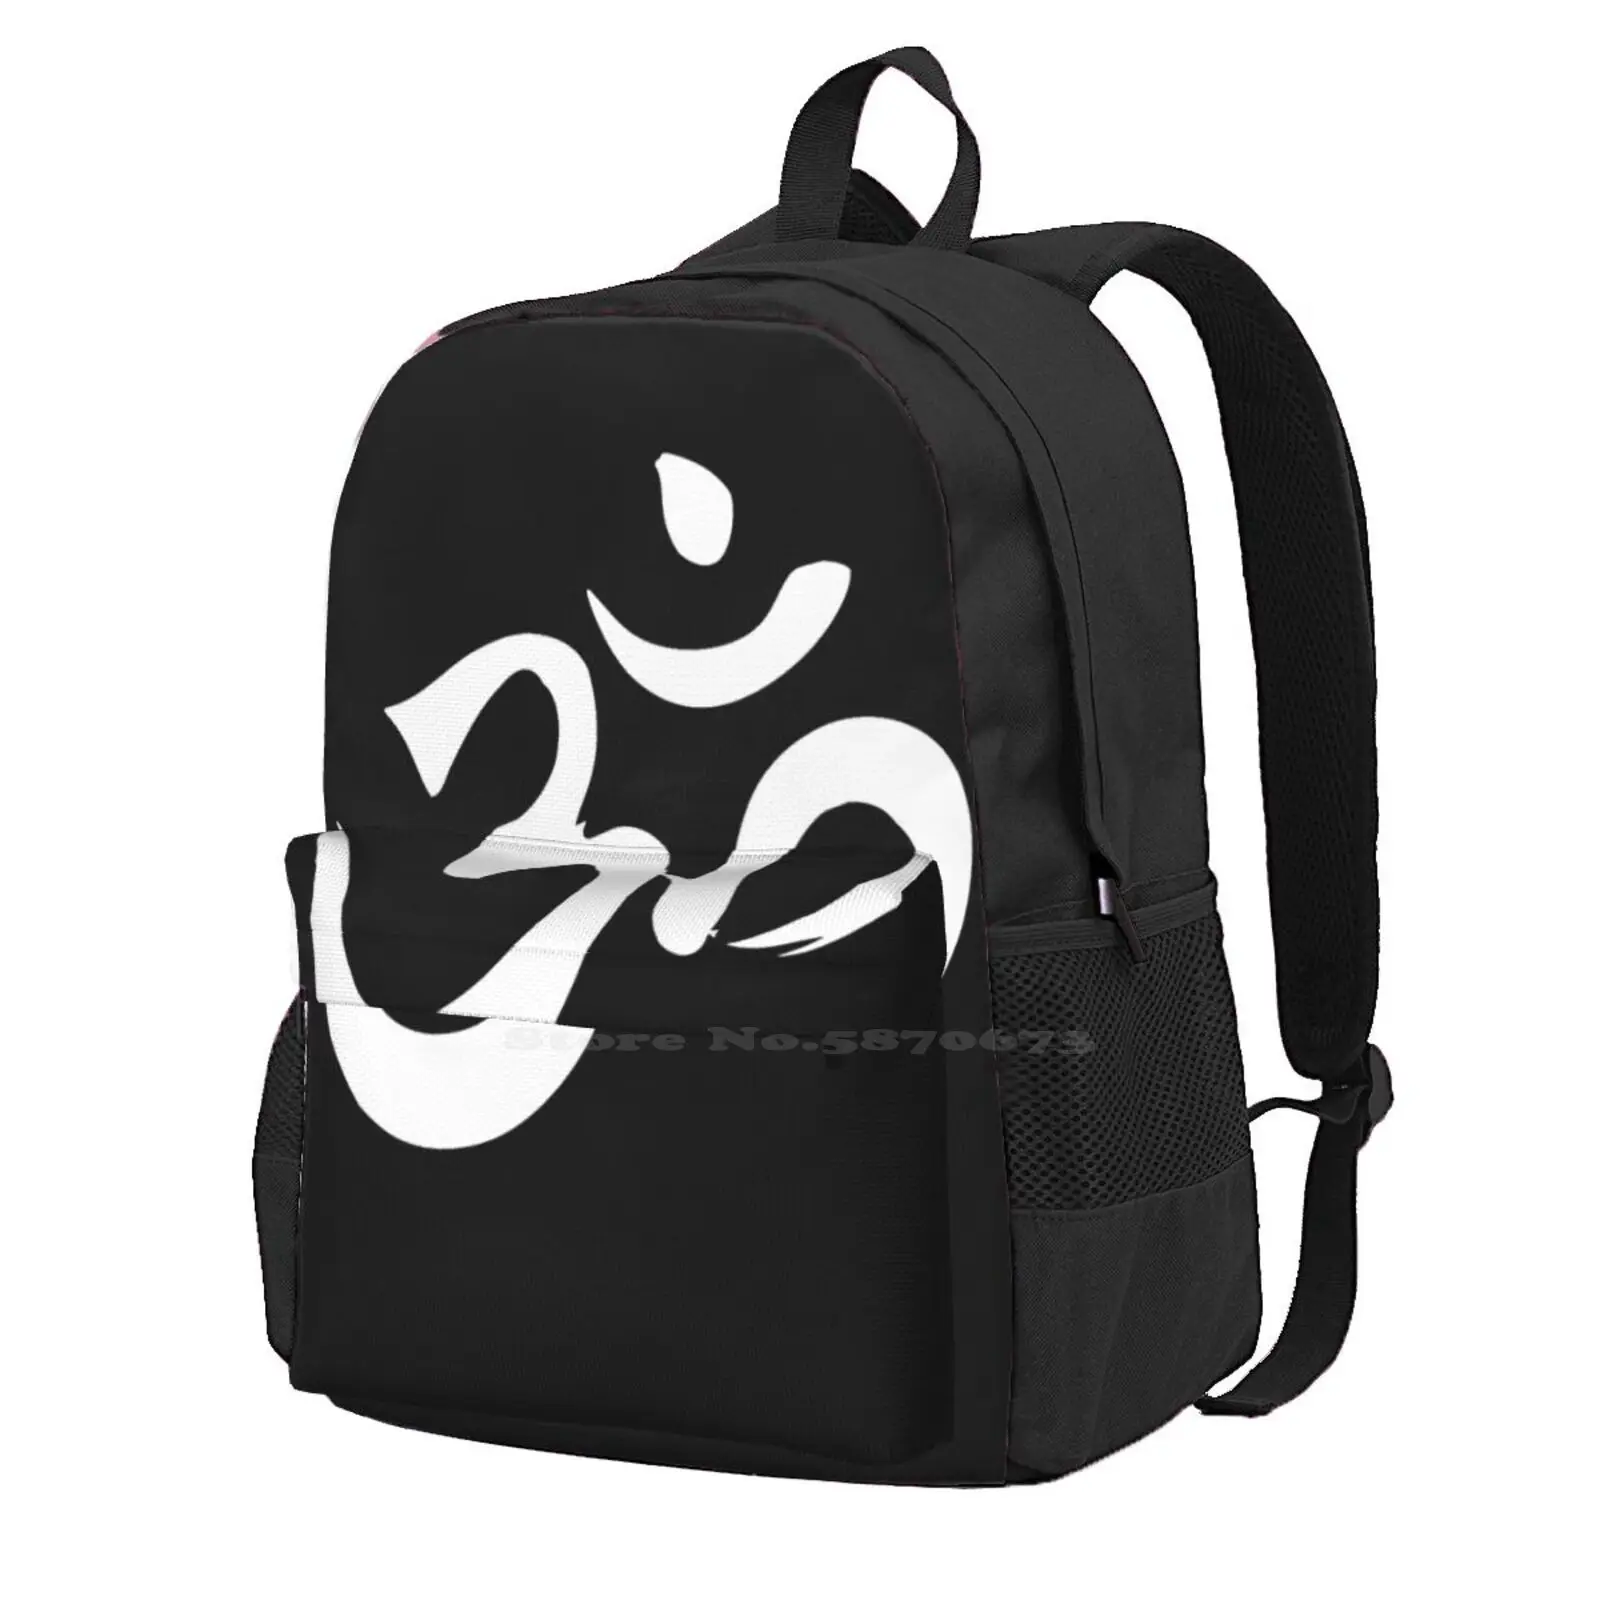 

Black And White Om Symbol School Bags For Teenage Girls Laptop Travel Bags Om Namaste Yogi Black And White B W Bnw Yoga